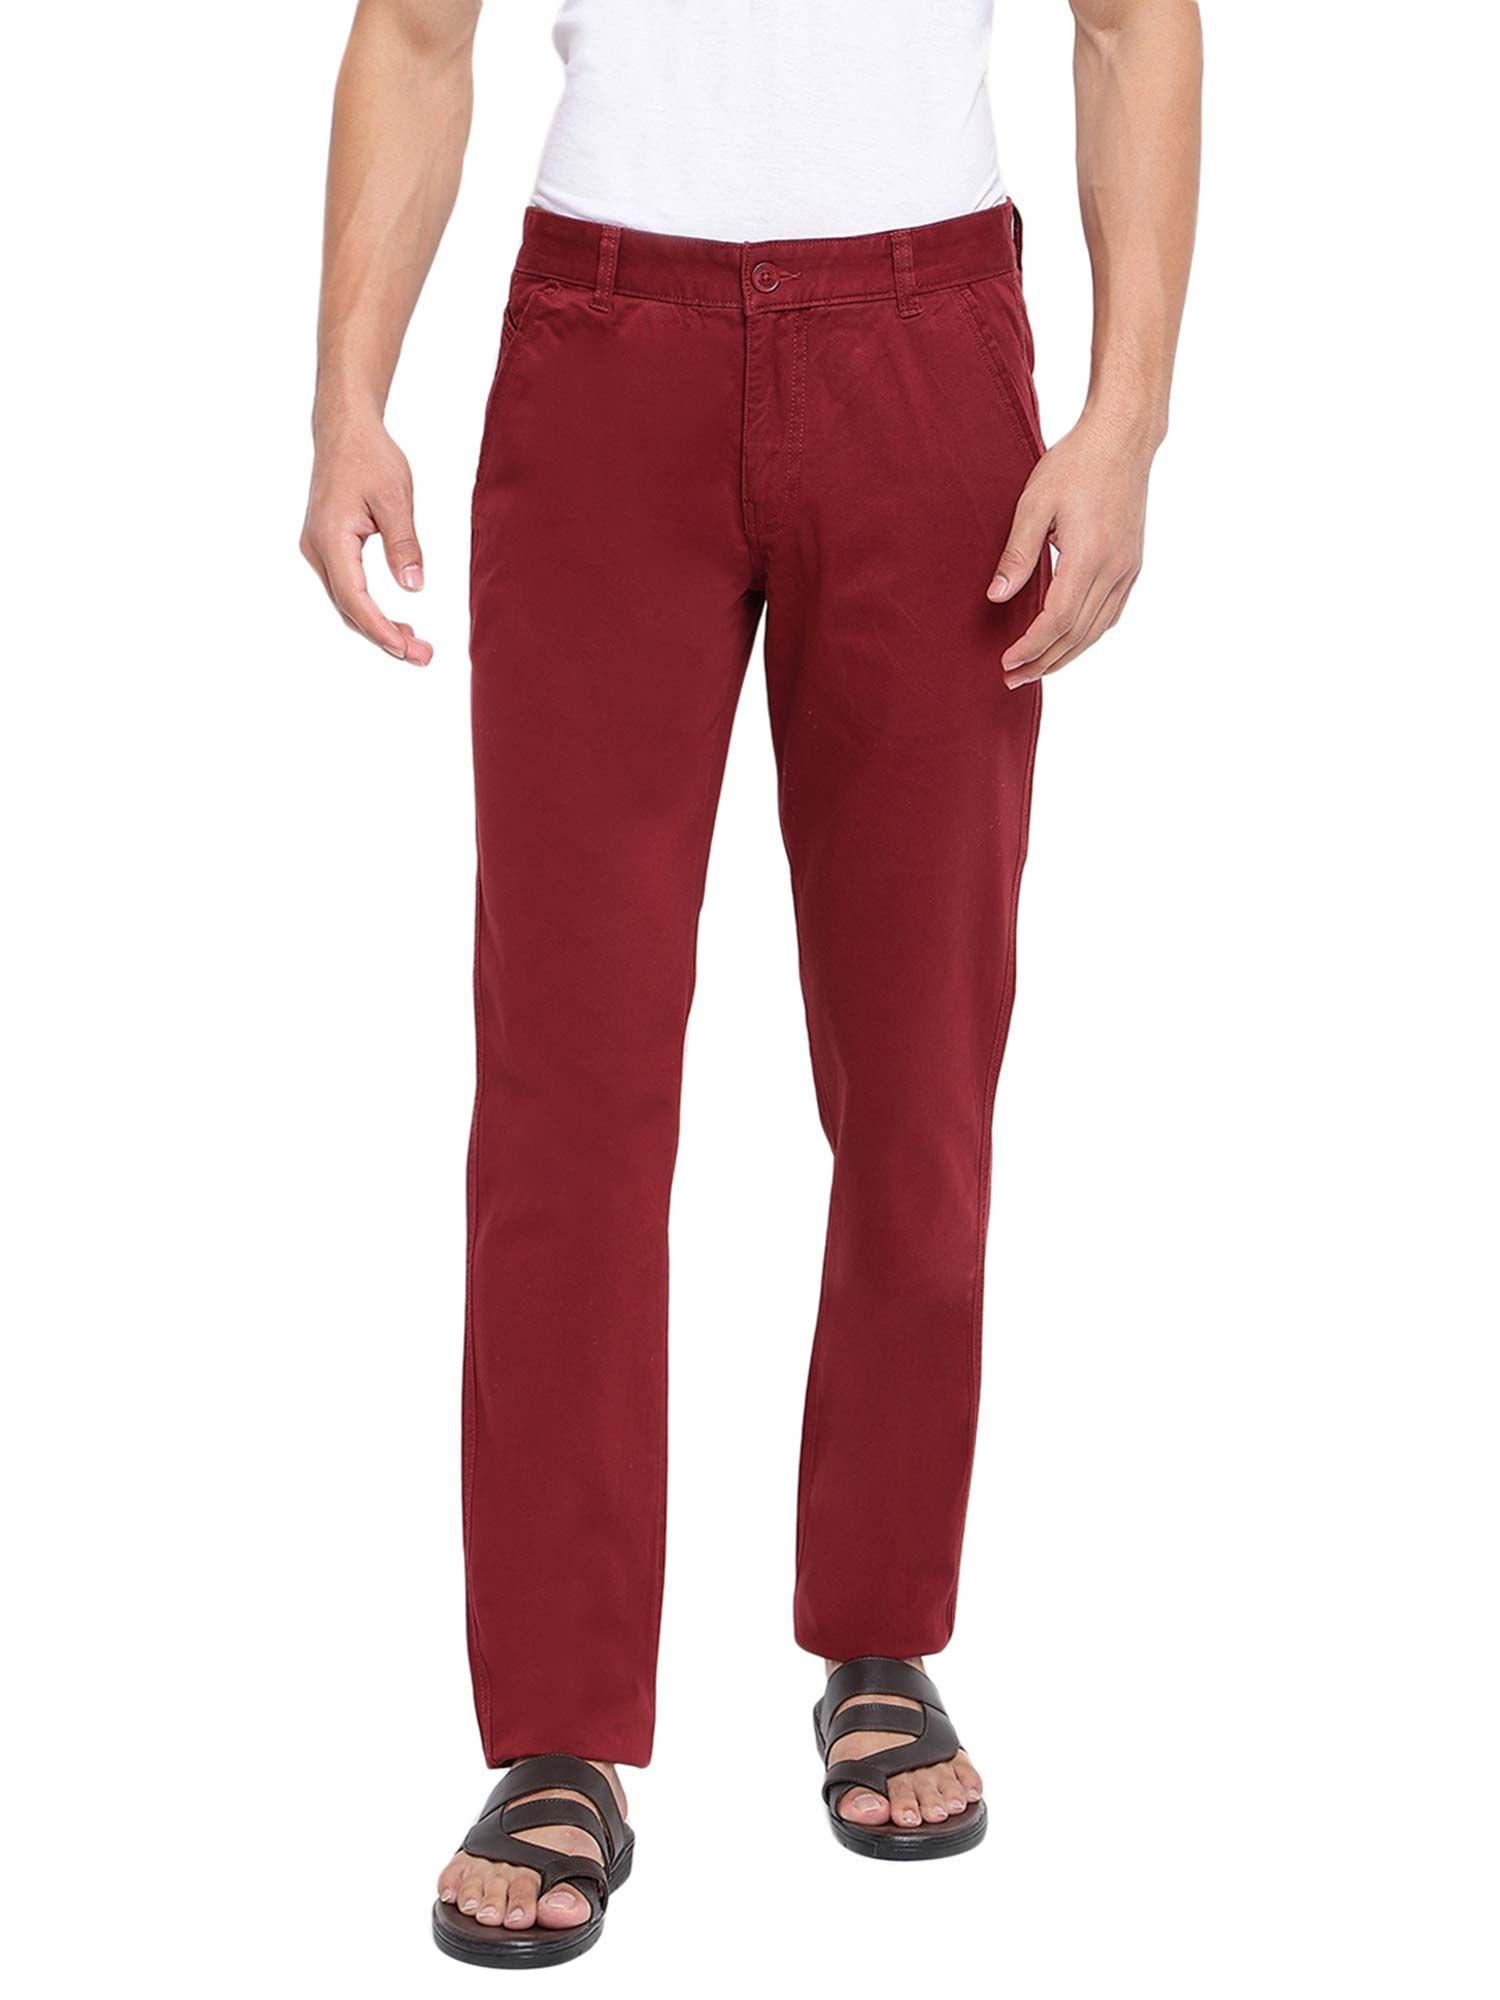 cotton-slim-fit-solid-burgundy-trouser